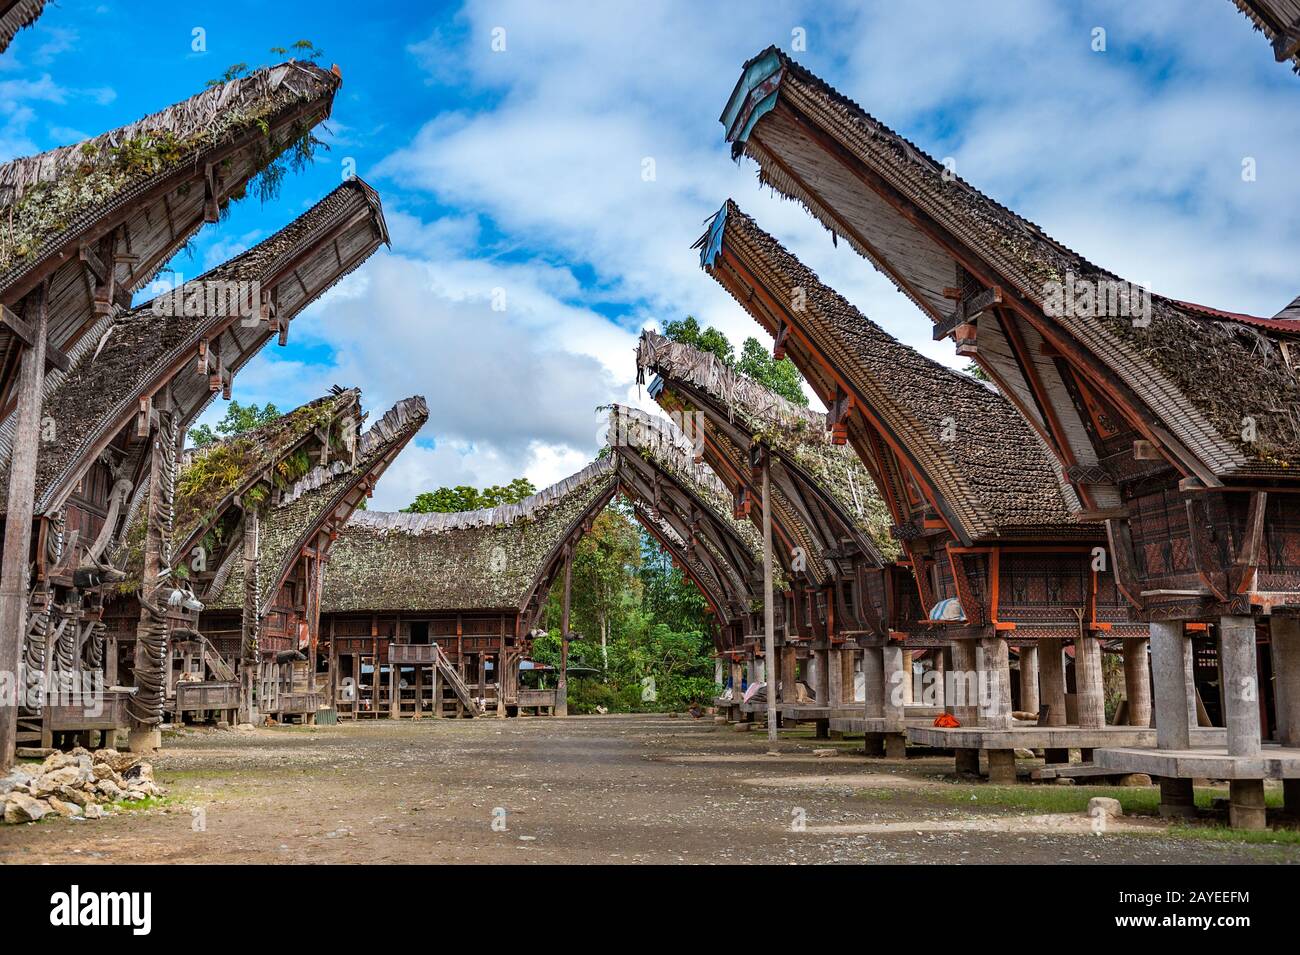 Maisons Tongkonan, bâtiments traditionnels Torajan, Tana Toraja, Sulawesi, Indonésie Banque D'Images